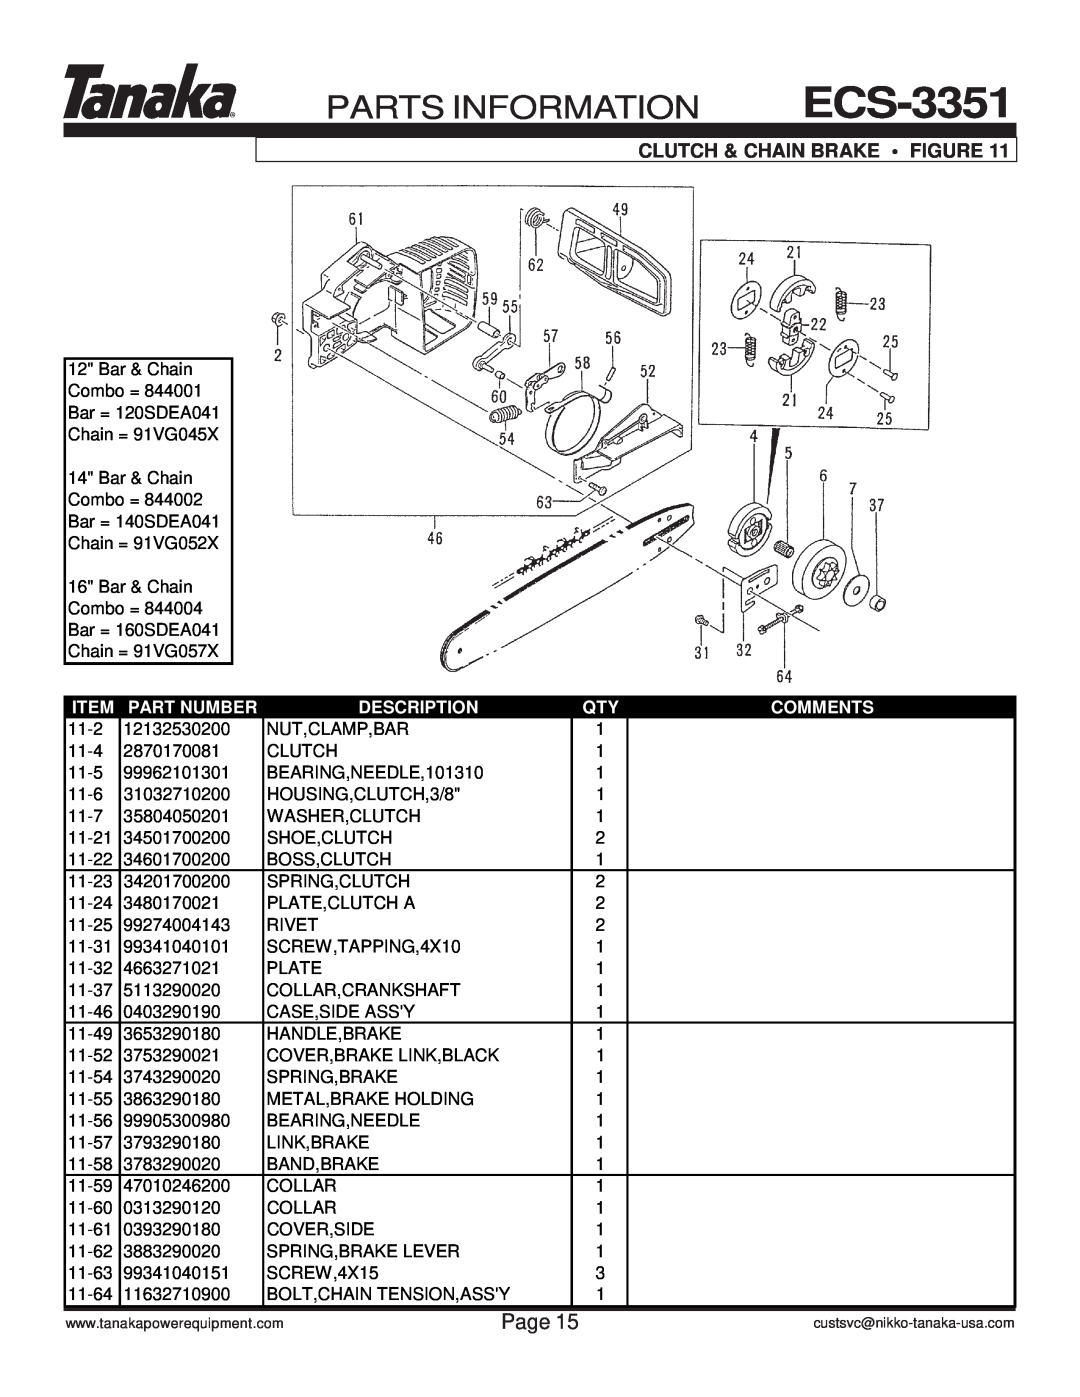 Tanaka ECS-3351/B manual Clutch & Chain Brake Figure, Parts Information, Page, Part Number, Description, Comments 